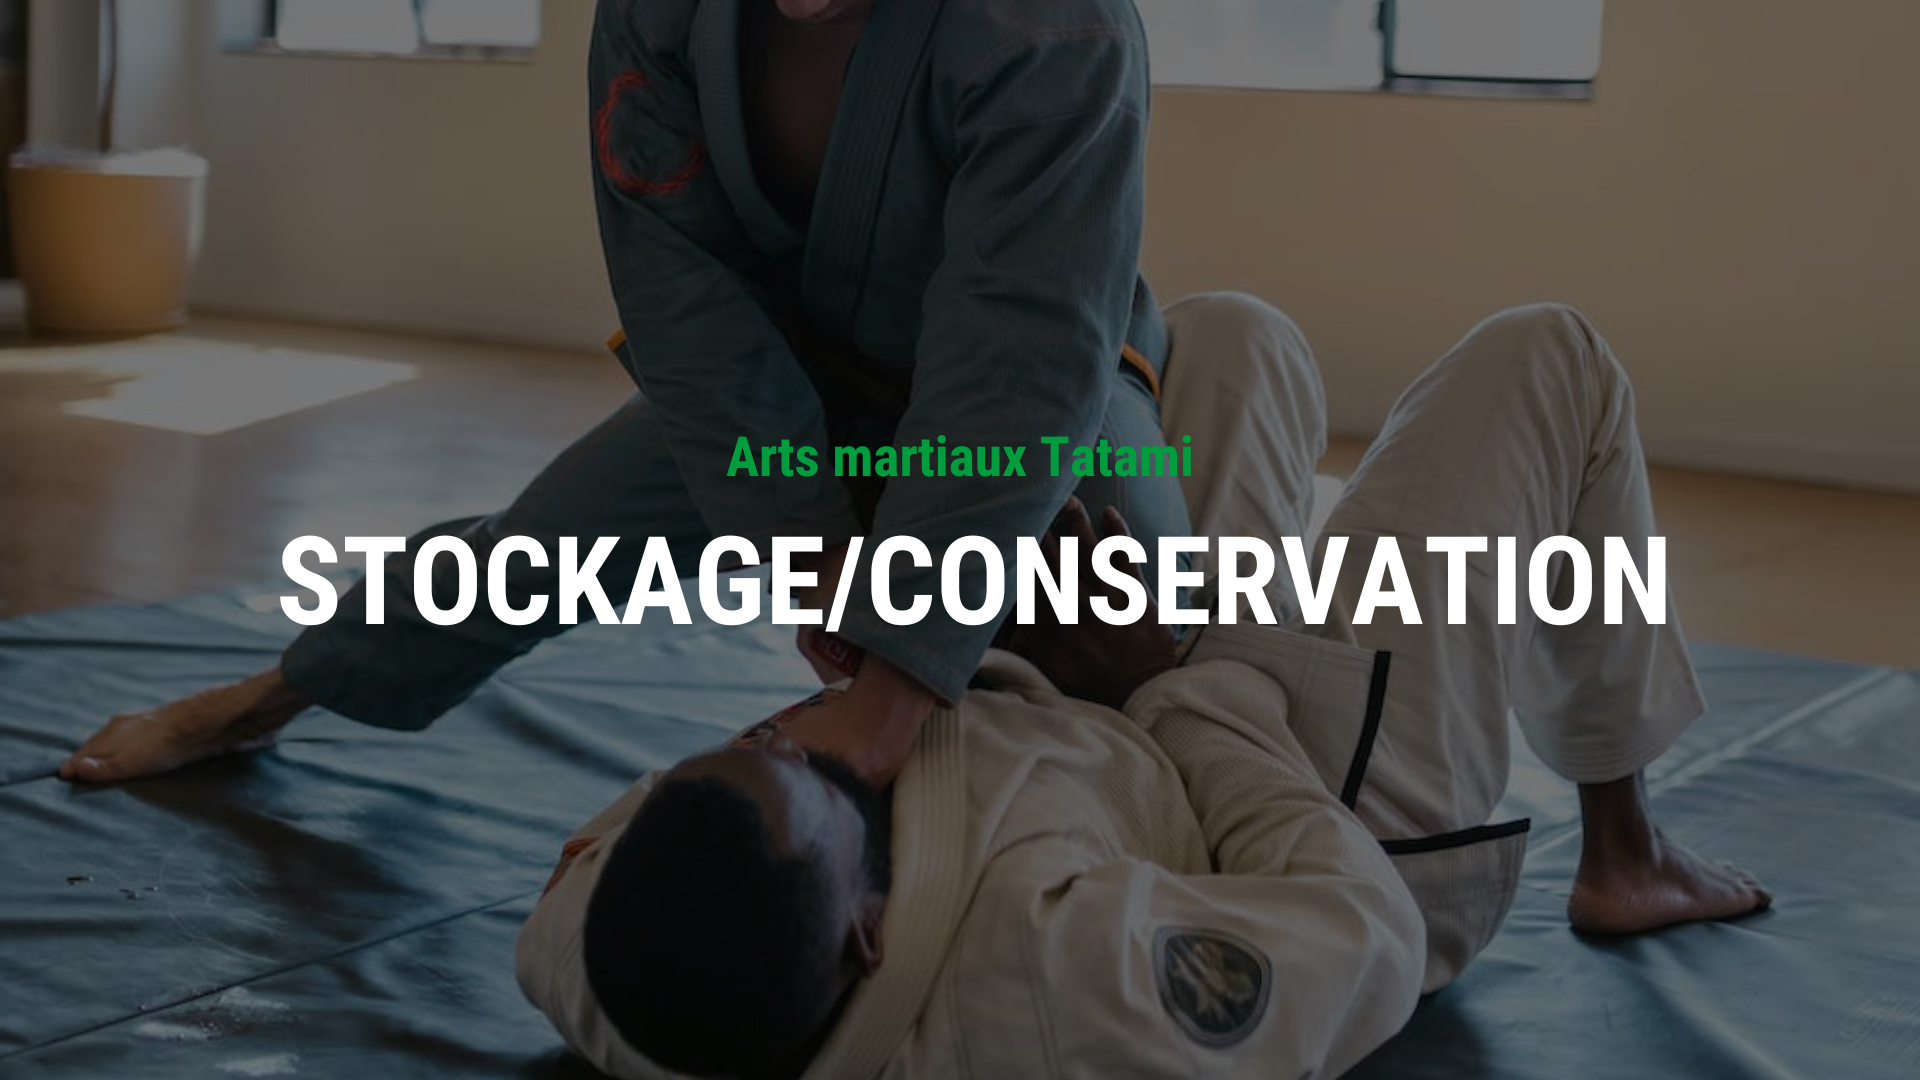 Stockage-Conservation des arts martiaux Tatami